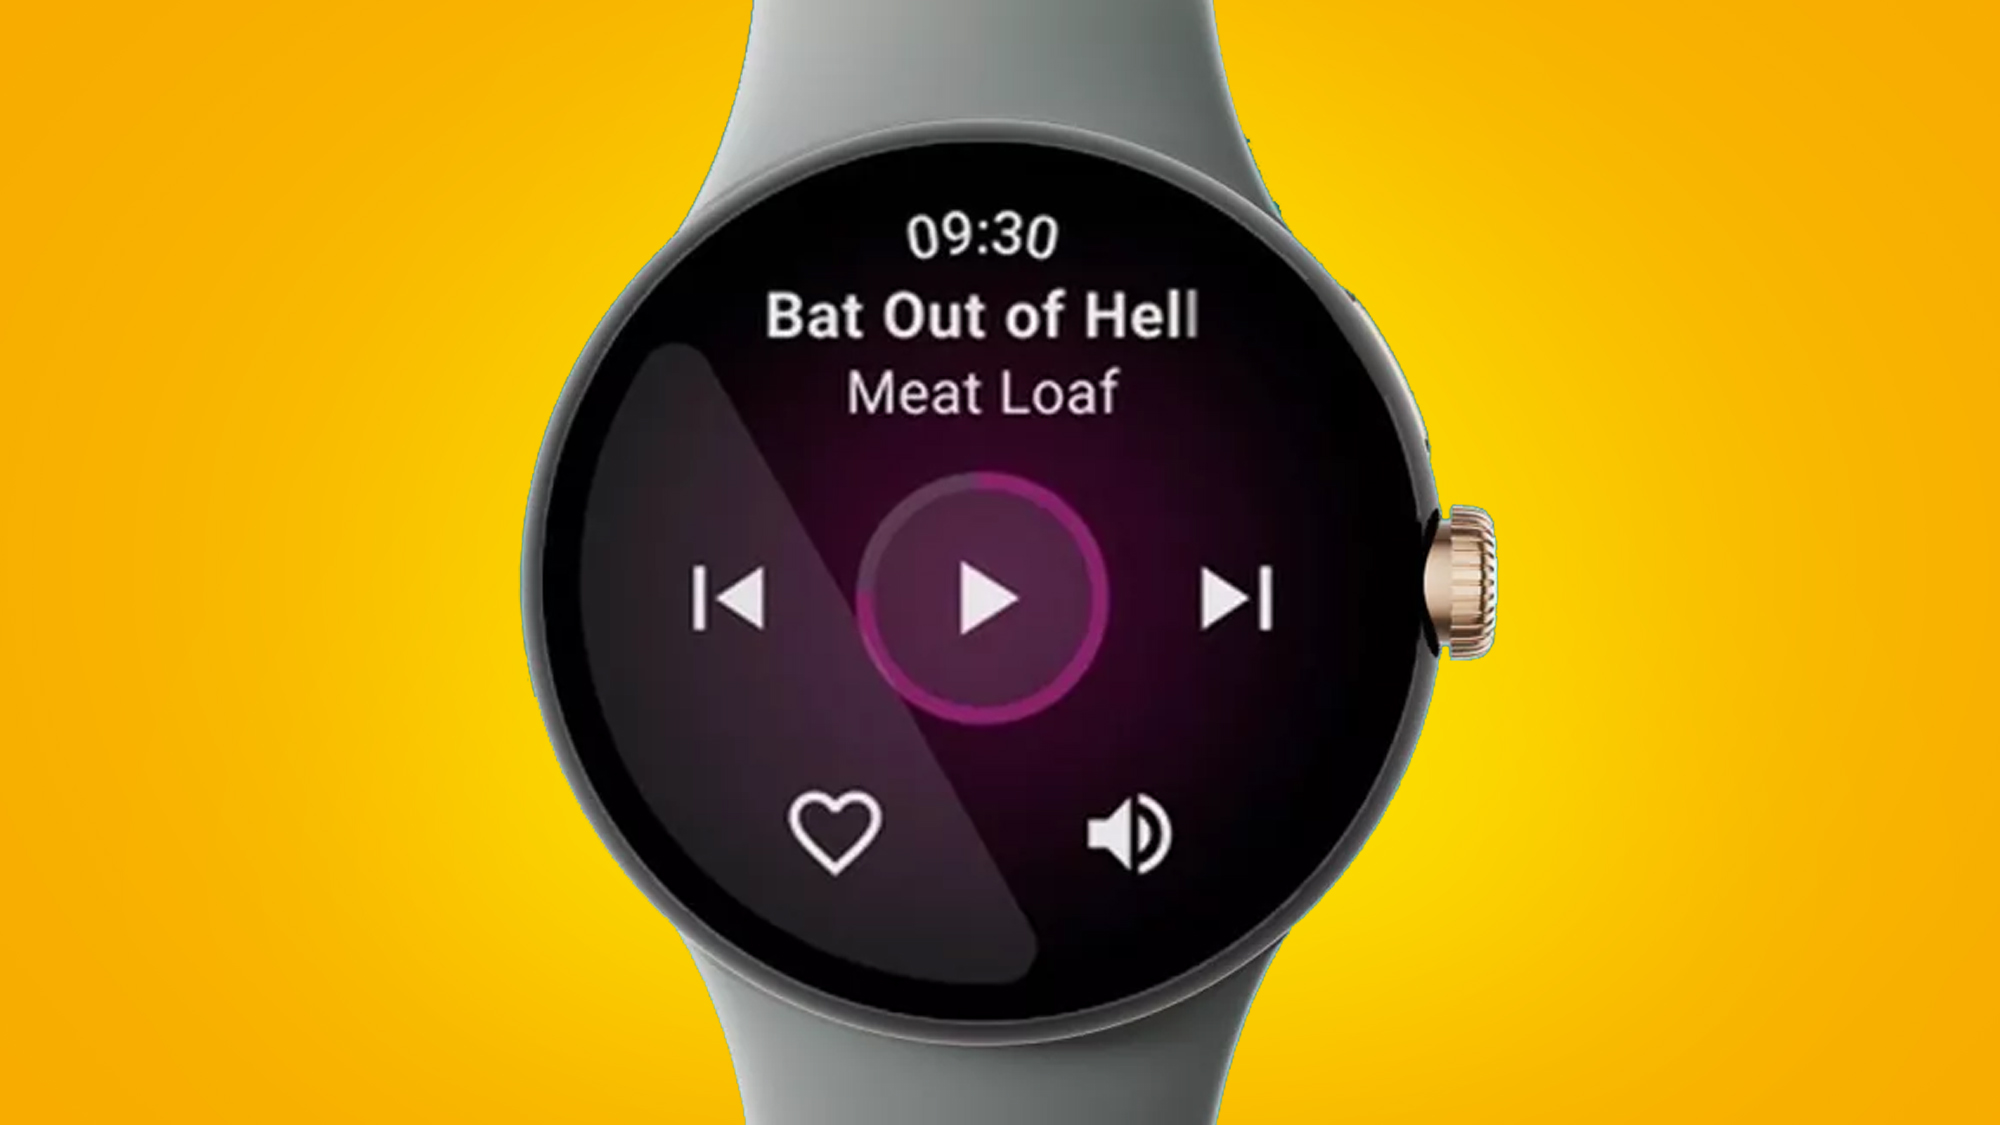 Smartwatch on an orange background with Google Wear OS